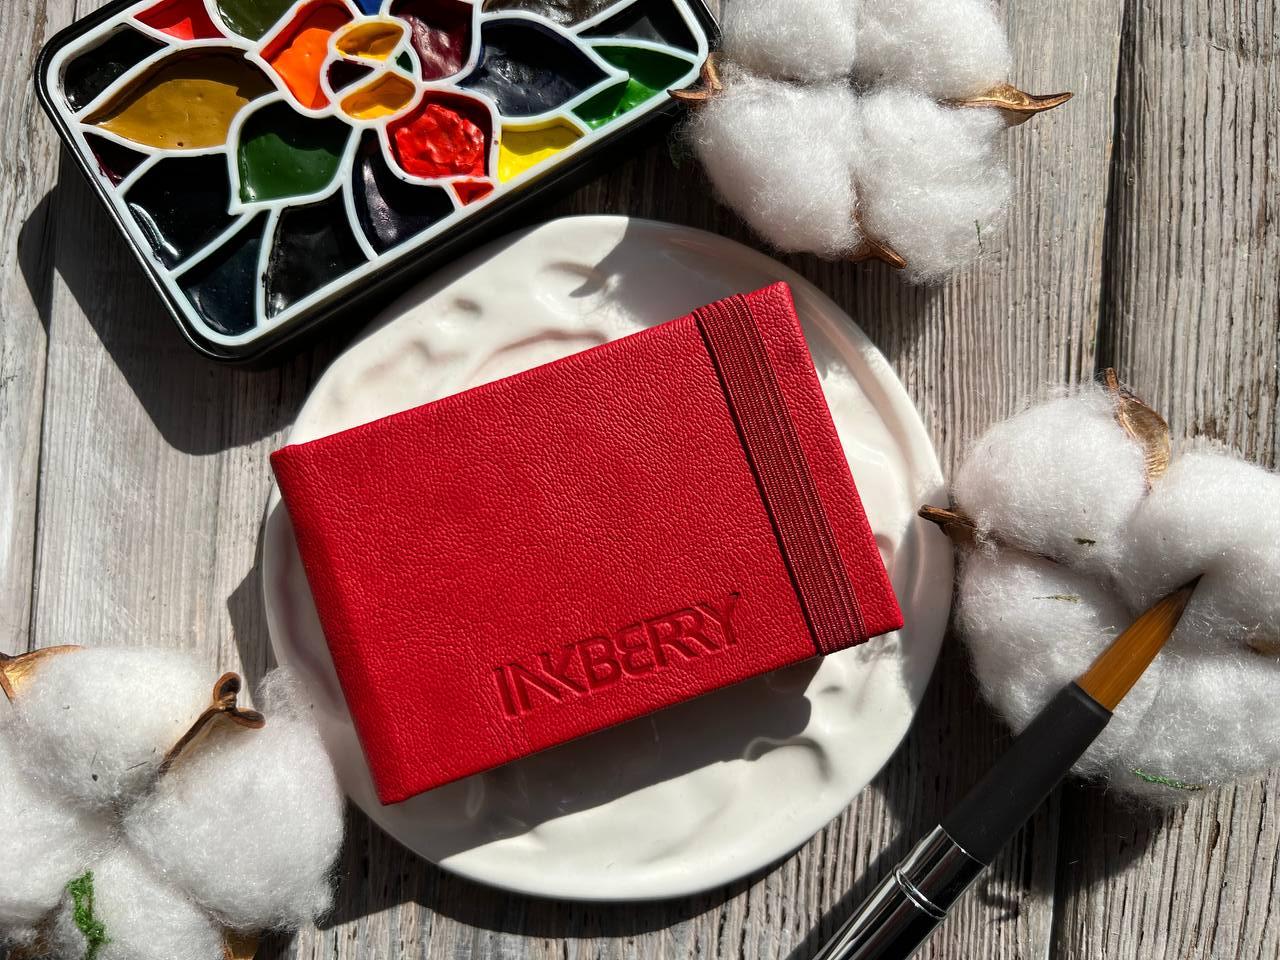 Скетчбук для акварели Inkberry 5х8 см 230 г 50% хлопка, красный Inkberry-iBmini-58-1